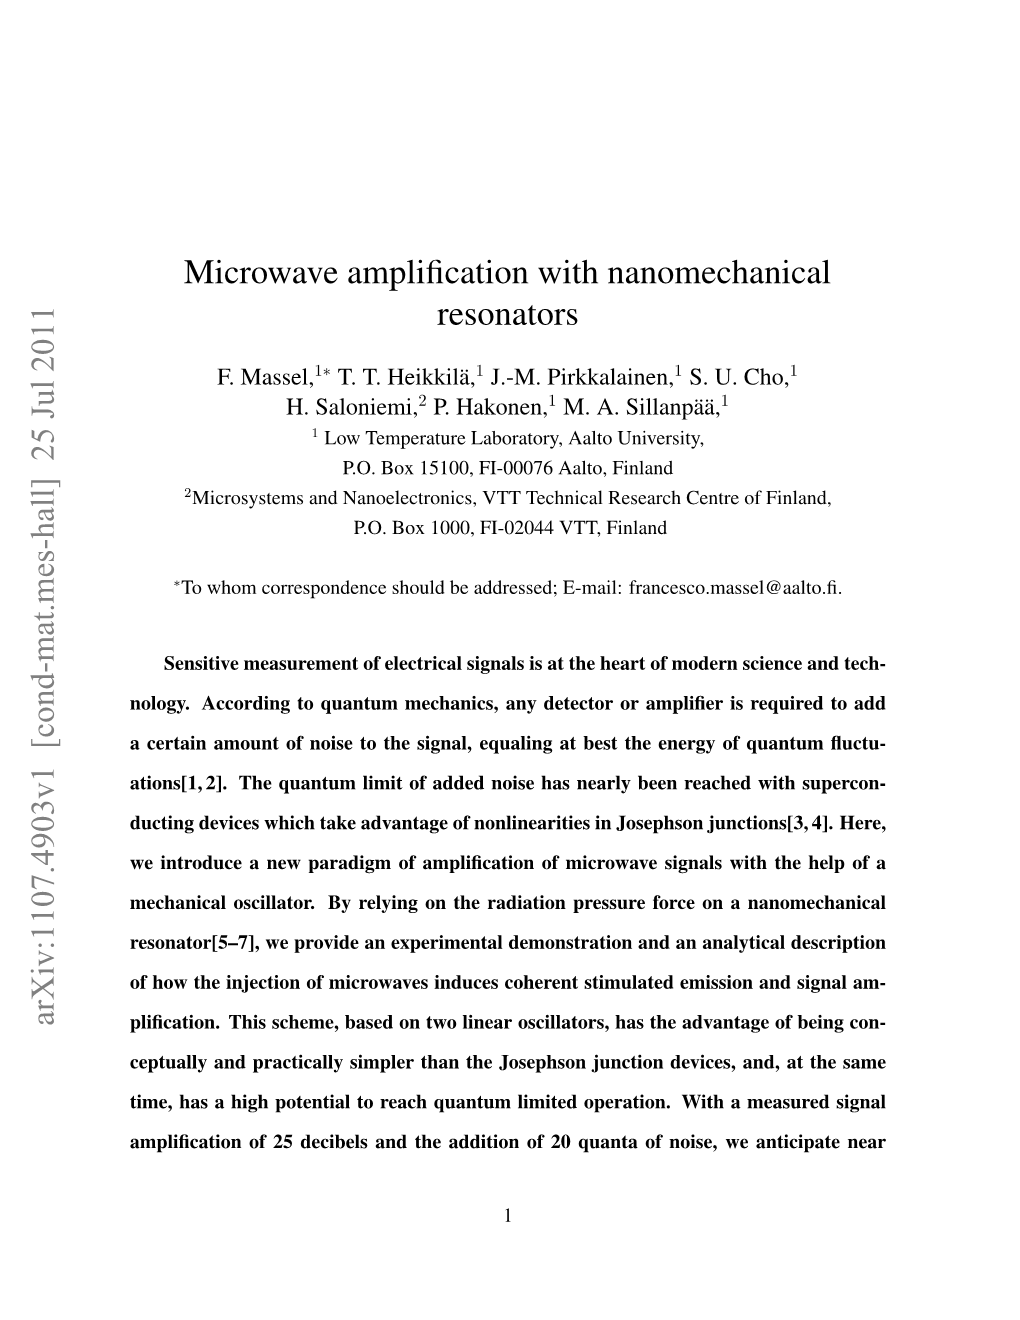 Microwave Amplification with Nanomechanical Resonators